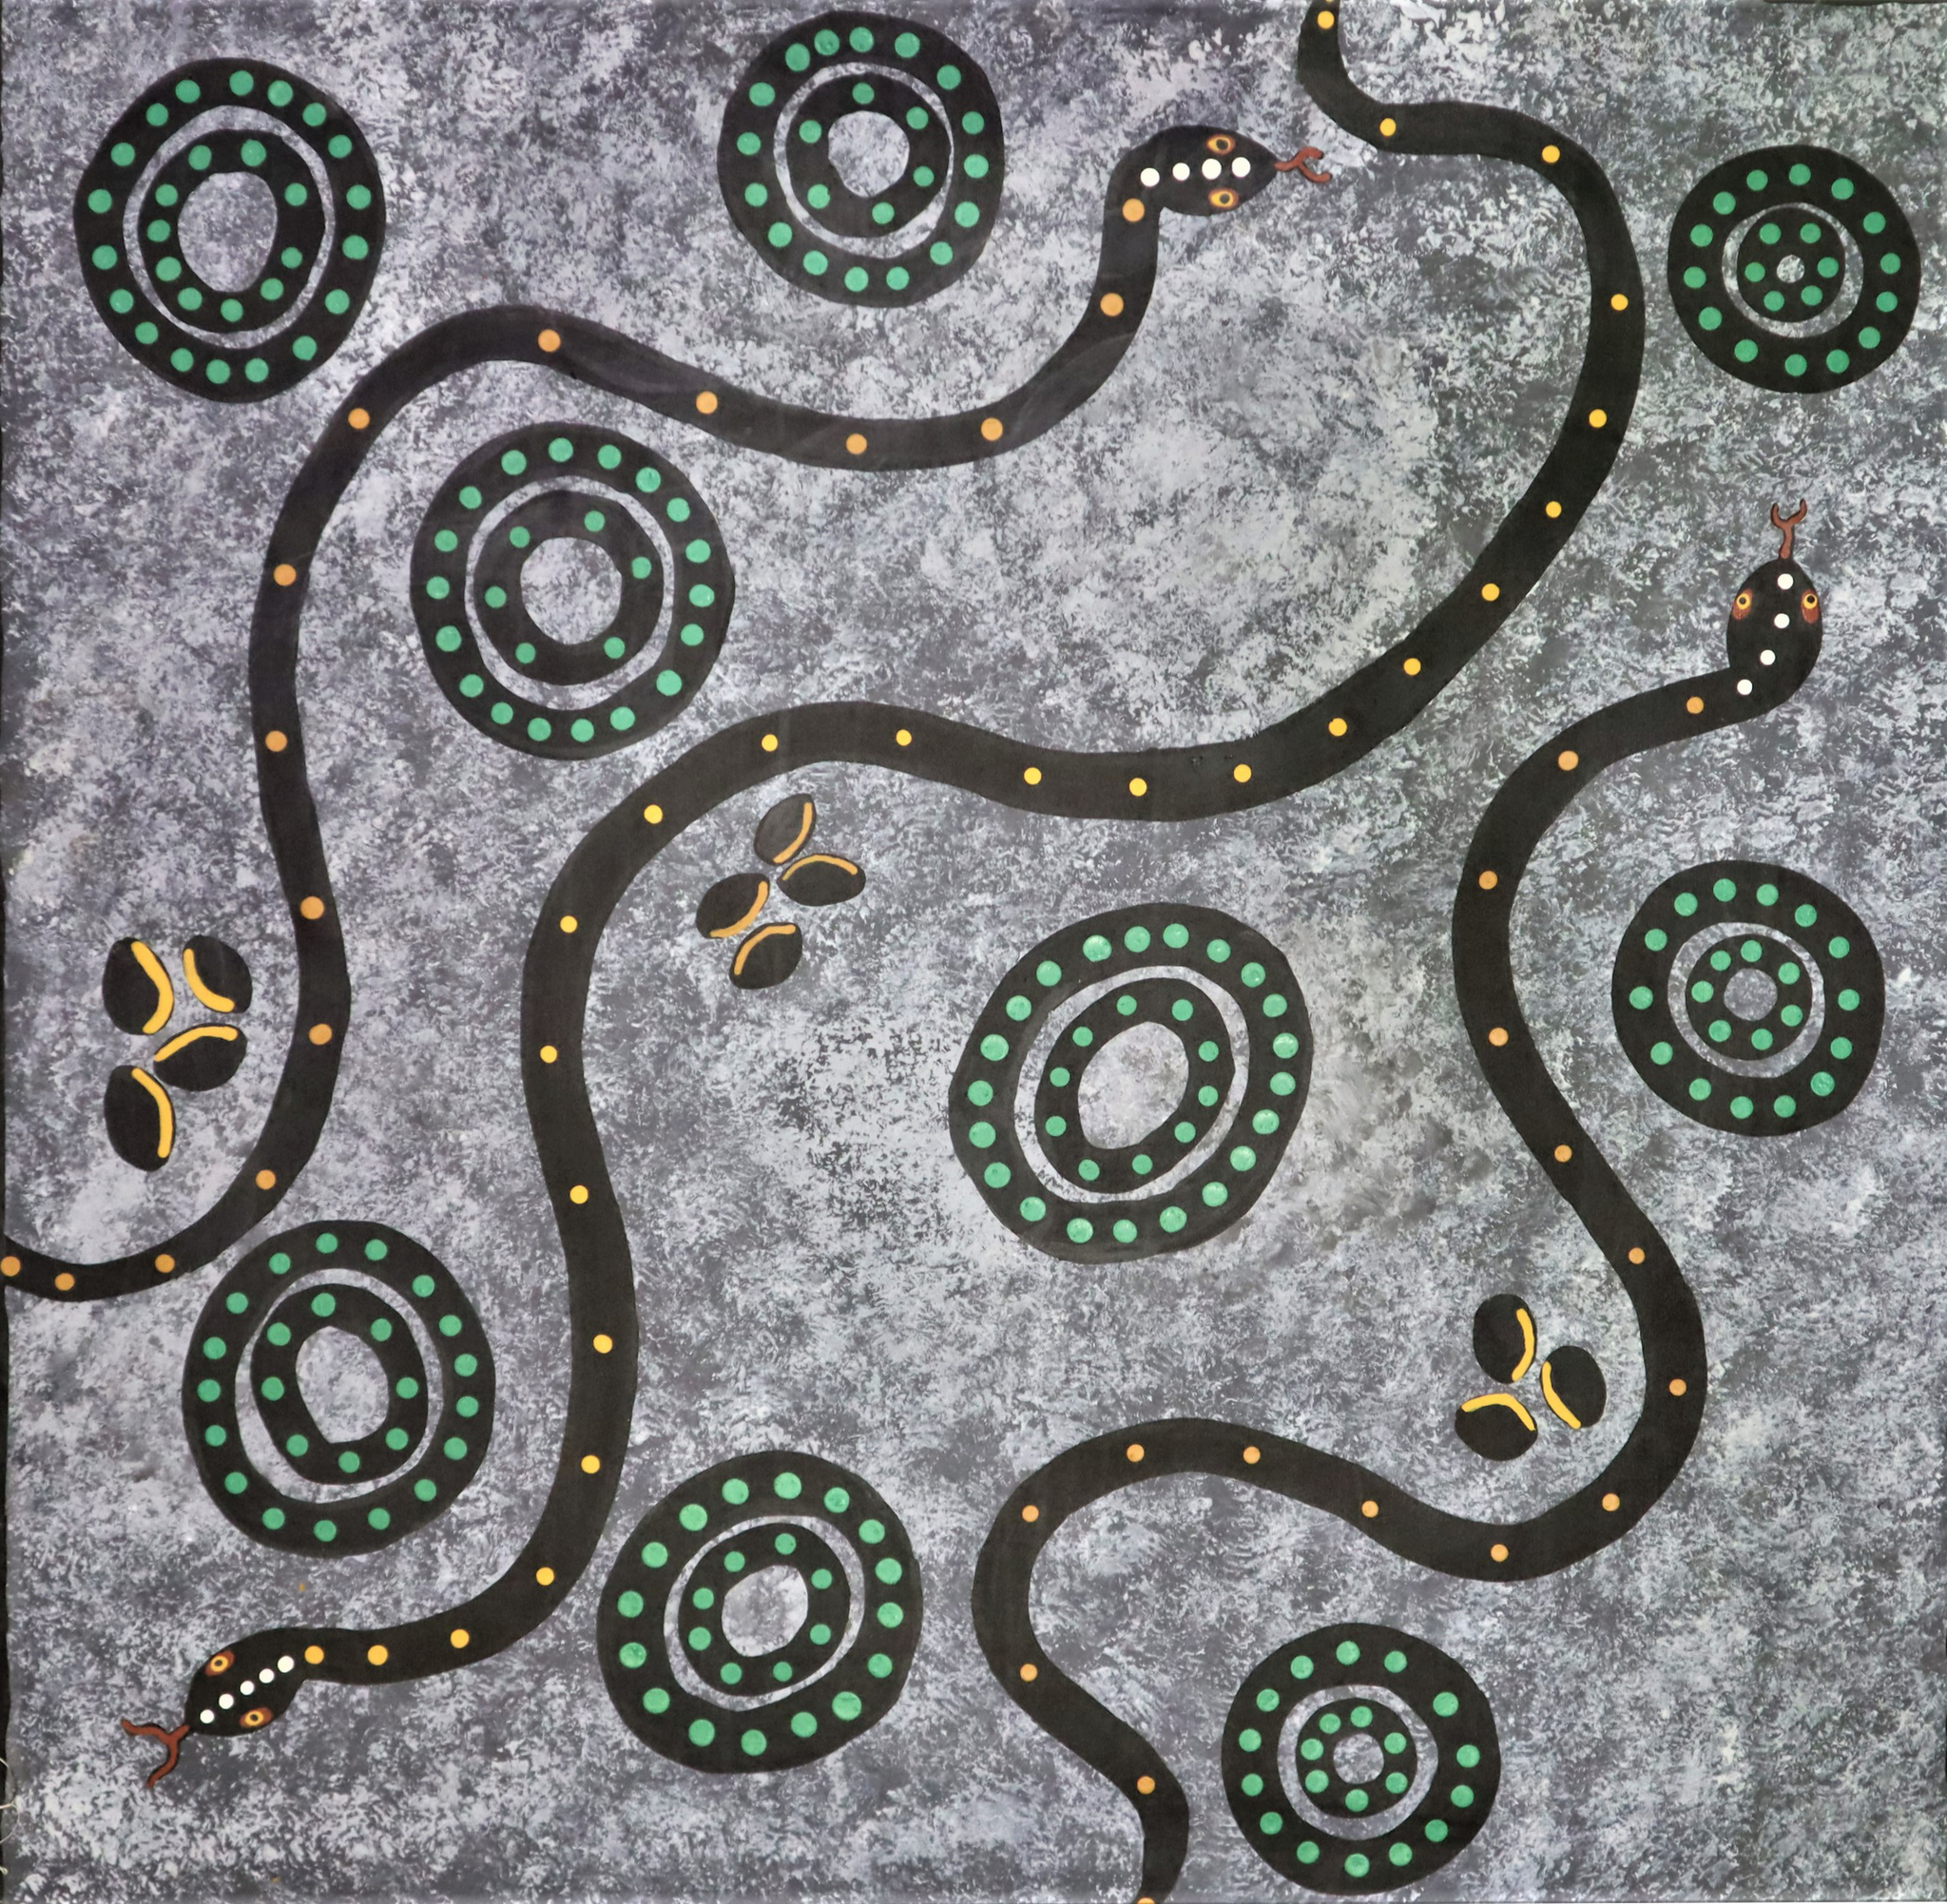 "Dreamtime Snake (Ungud) Watching Over Sacred Spring Waterhole" by Julie Wungundin